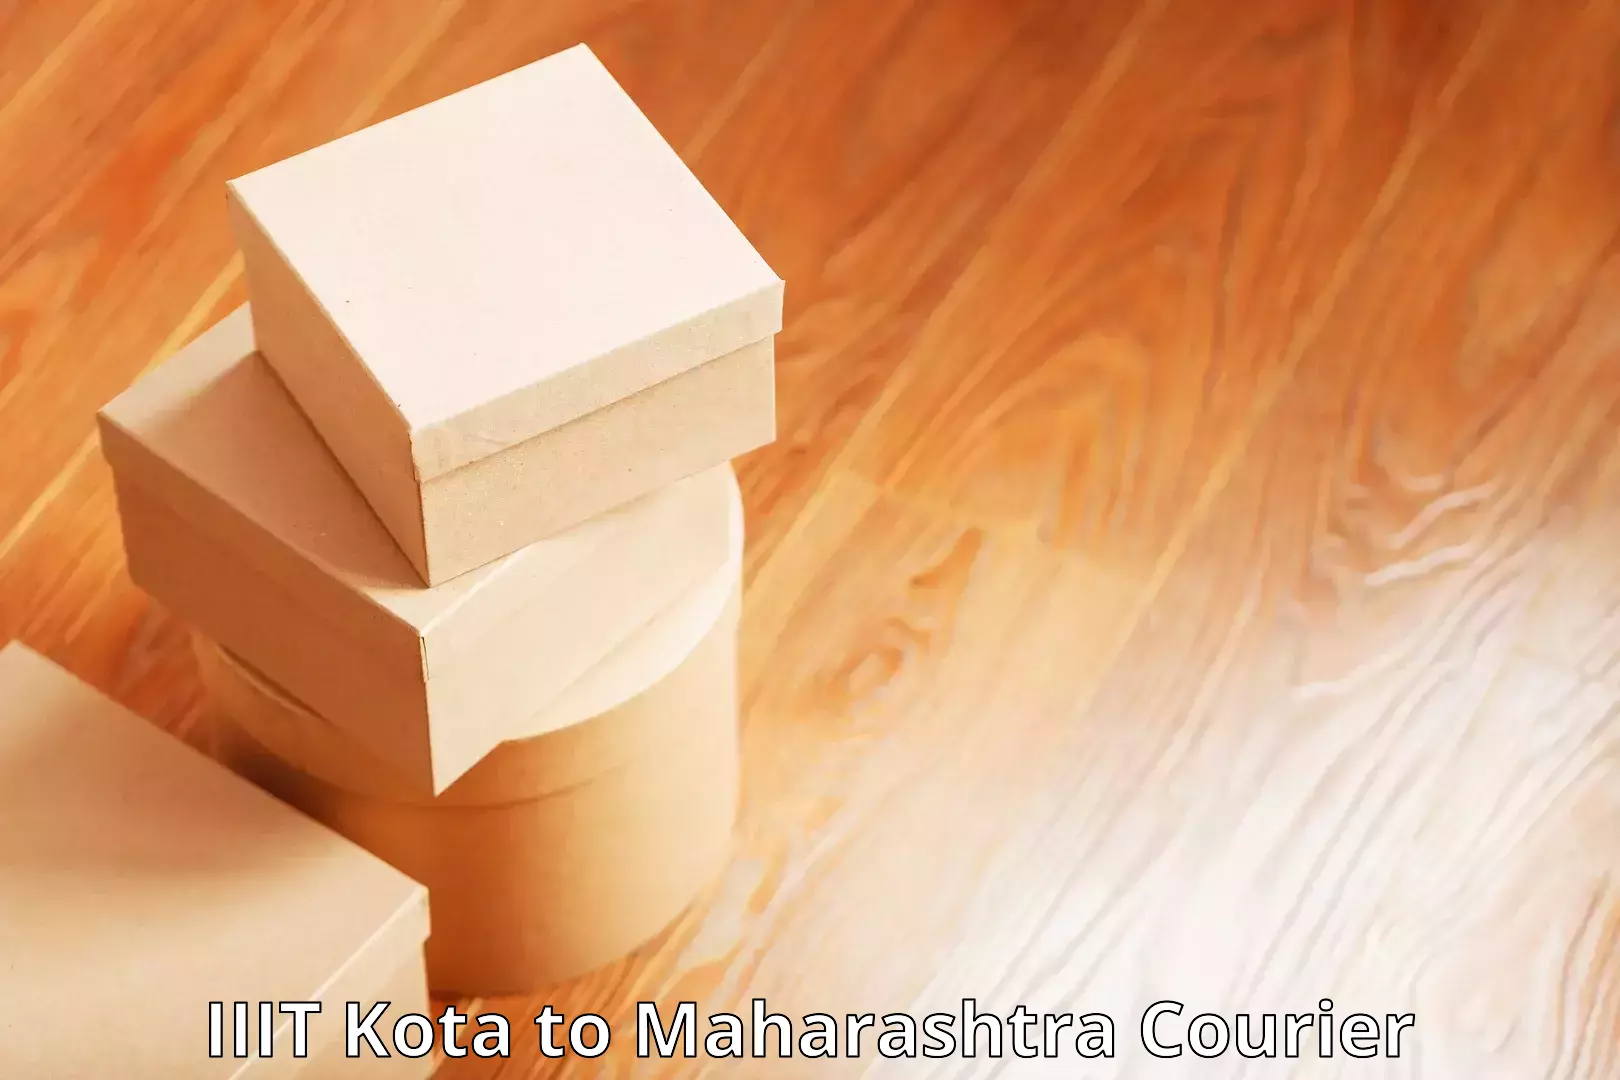 Next-day delivery options IIIT Kota to Mumbai University